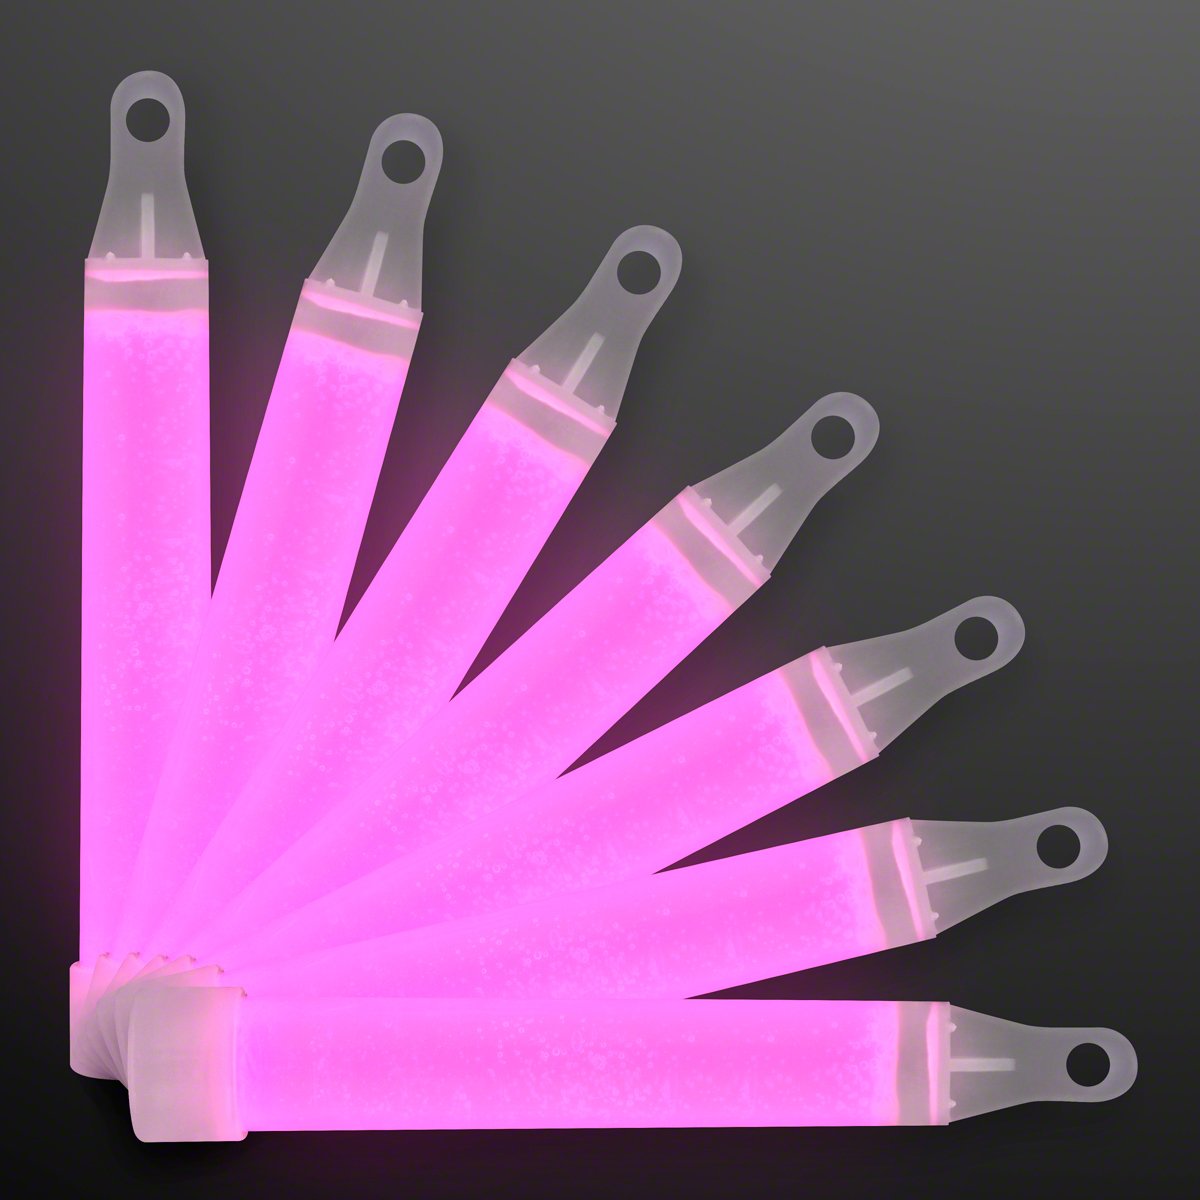 Glow Sticks Bulk Light Up Pump Rings Party Favor Glow in The Dark Toys 138  pcs